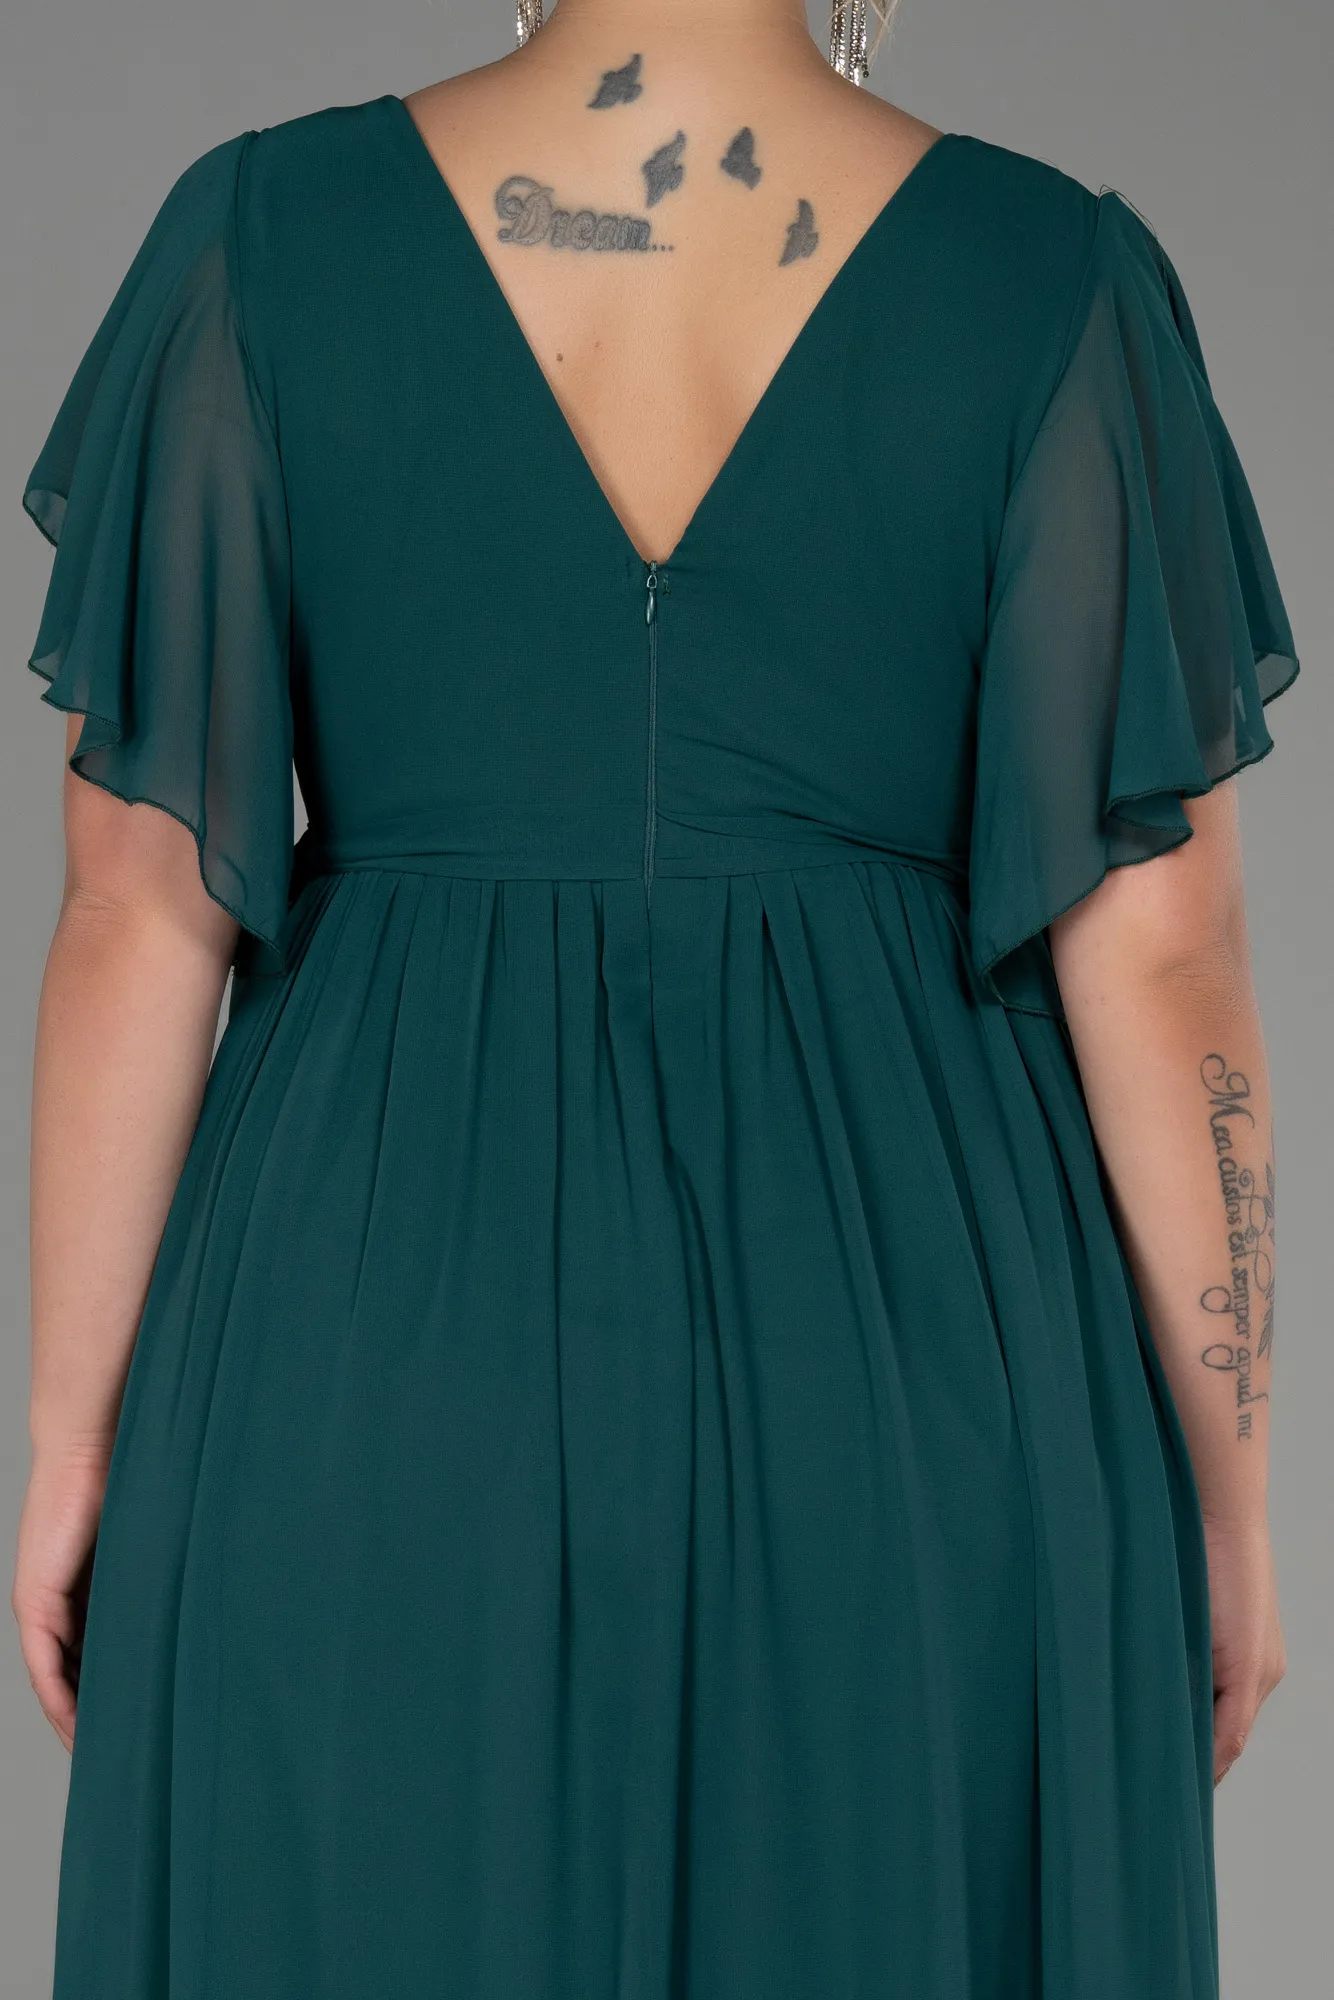 Emerald Green-Long Chiffon Plus Size Evening Dress ABU3276